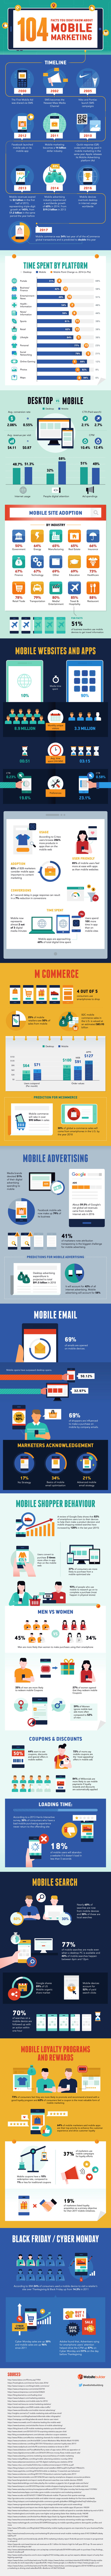 104 cosas que no sabías sobre mobile marketing